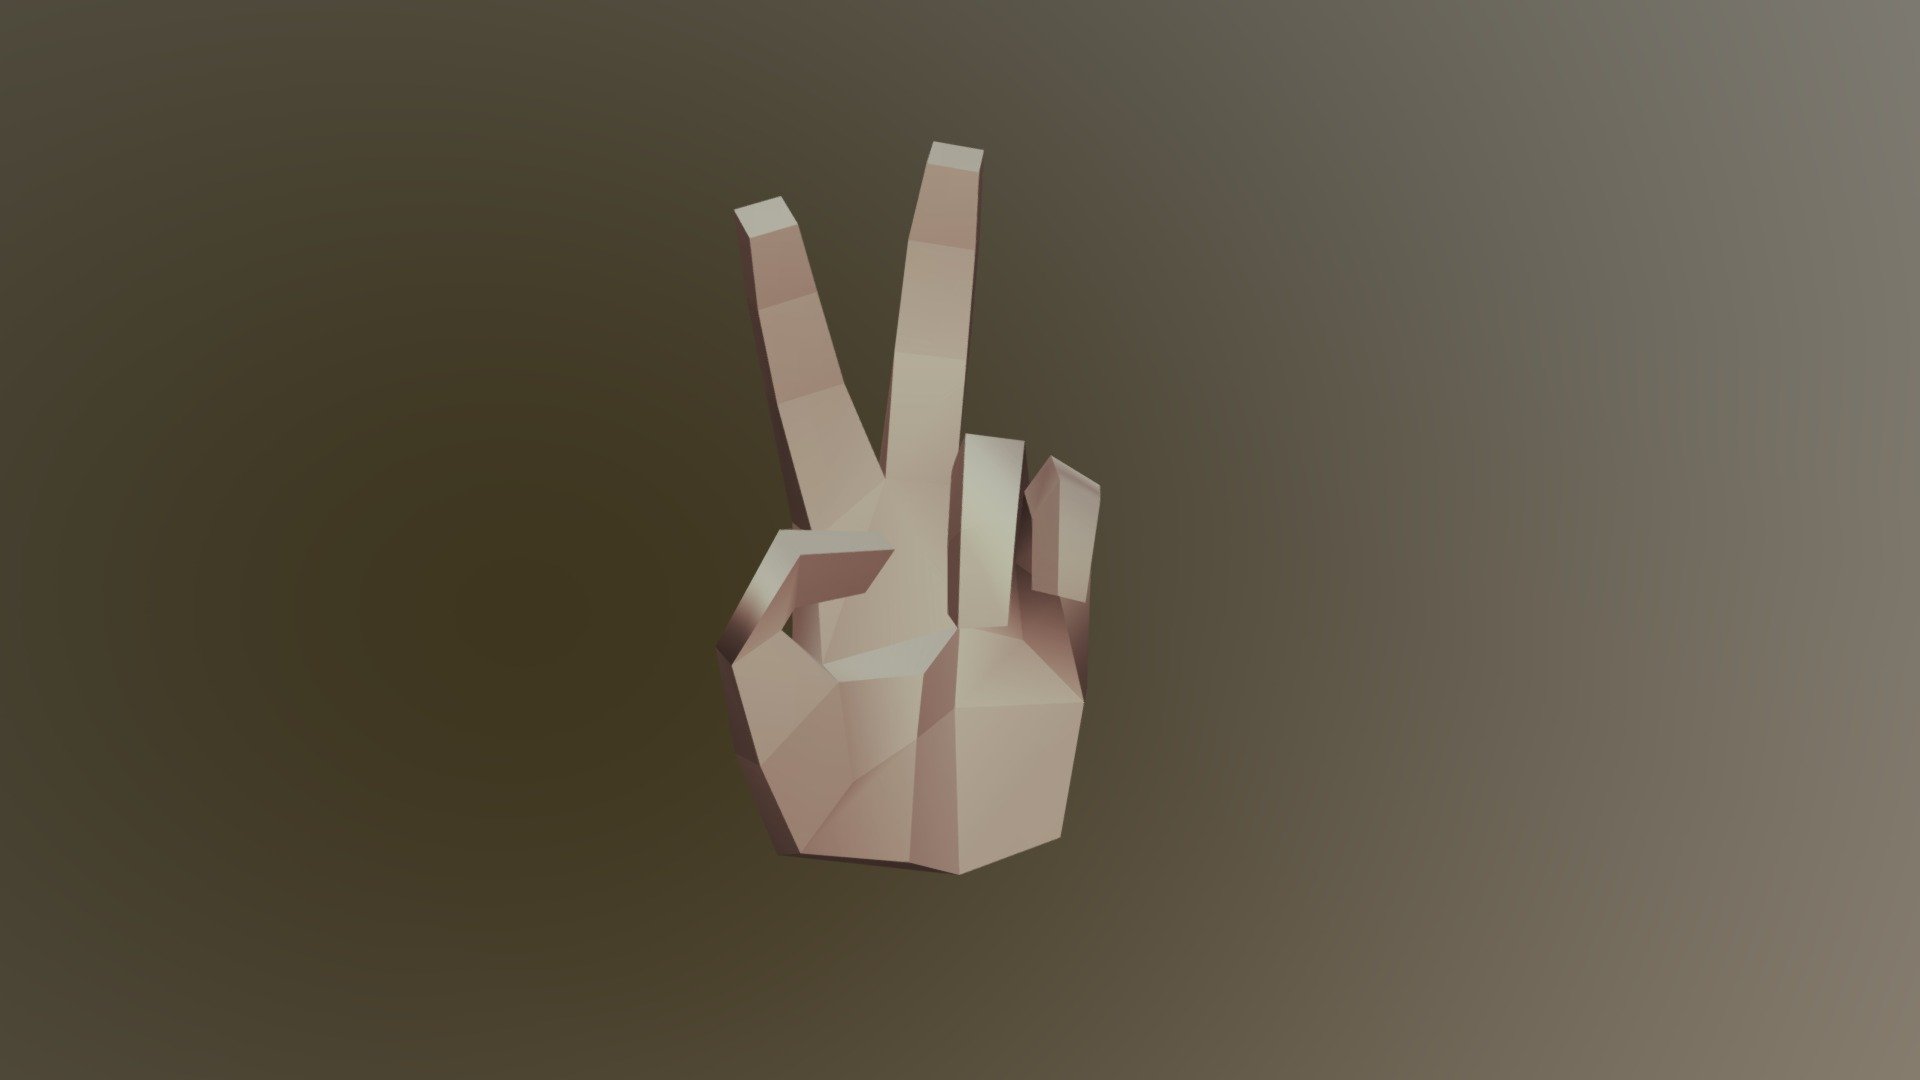 Mão low poly - 3D model by Vane (@vanetyd) [a5d8df9]